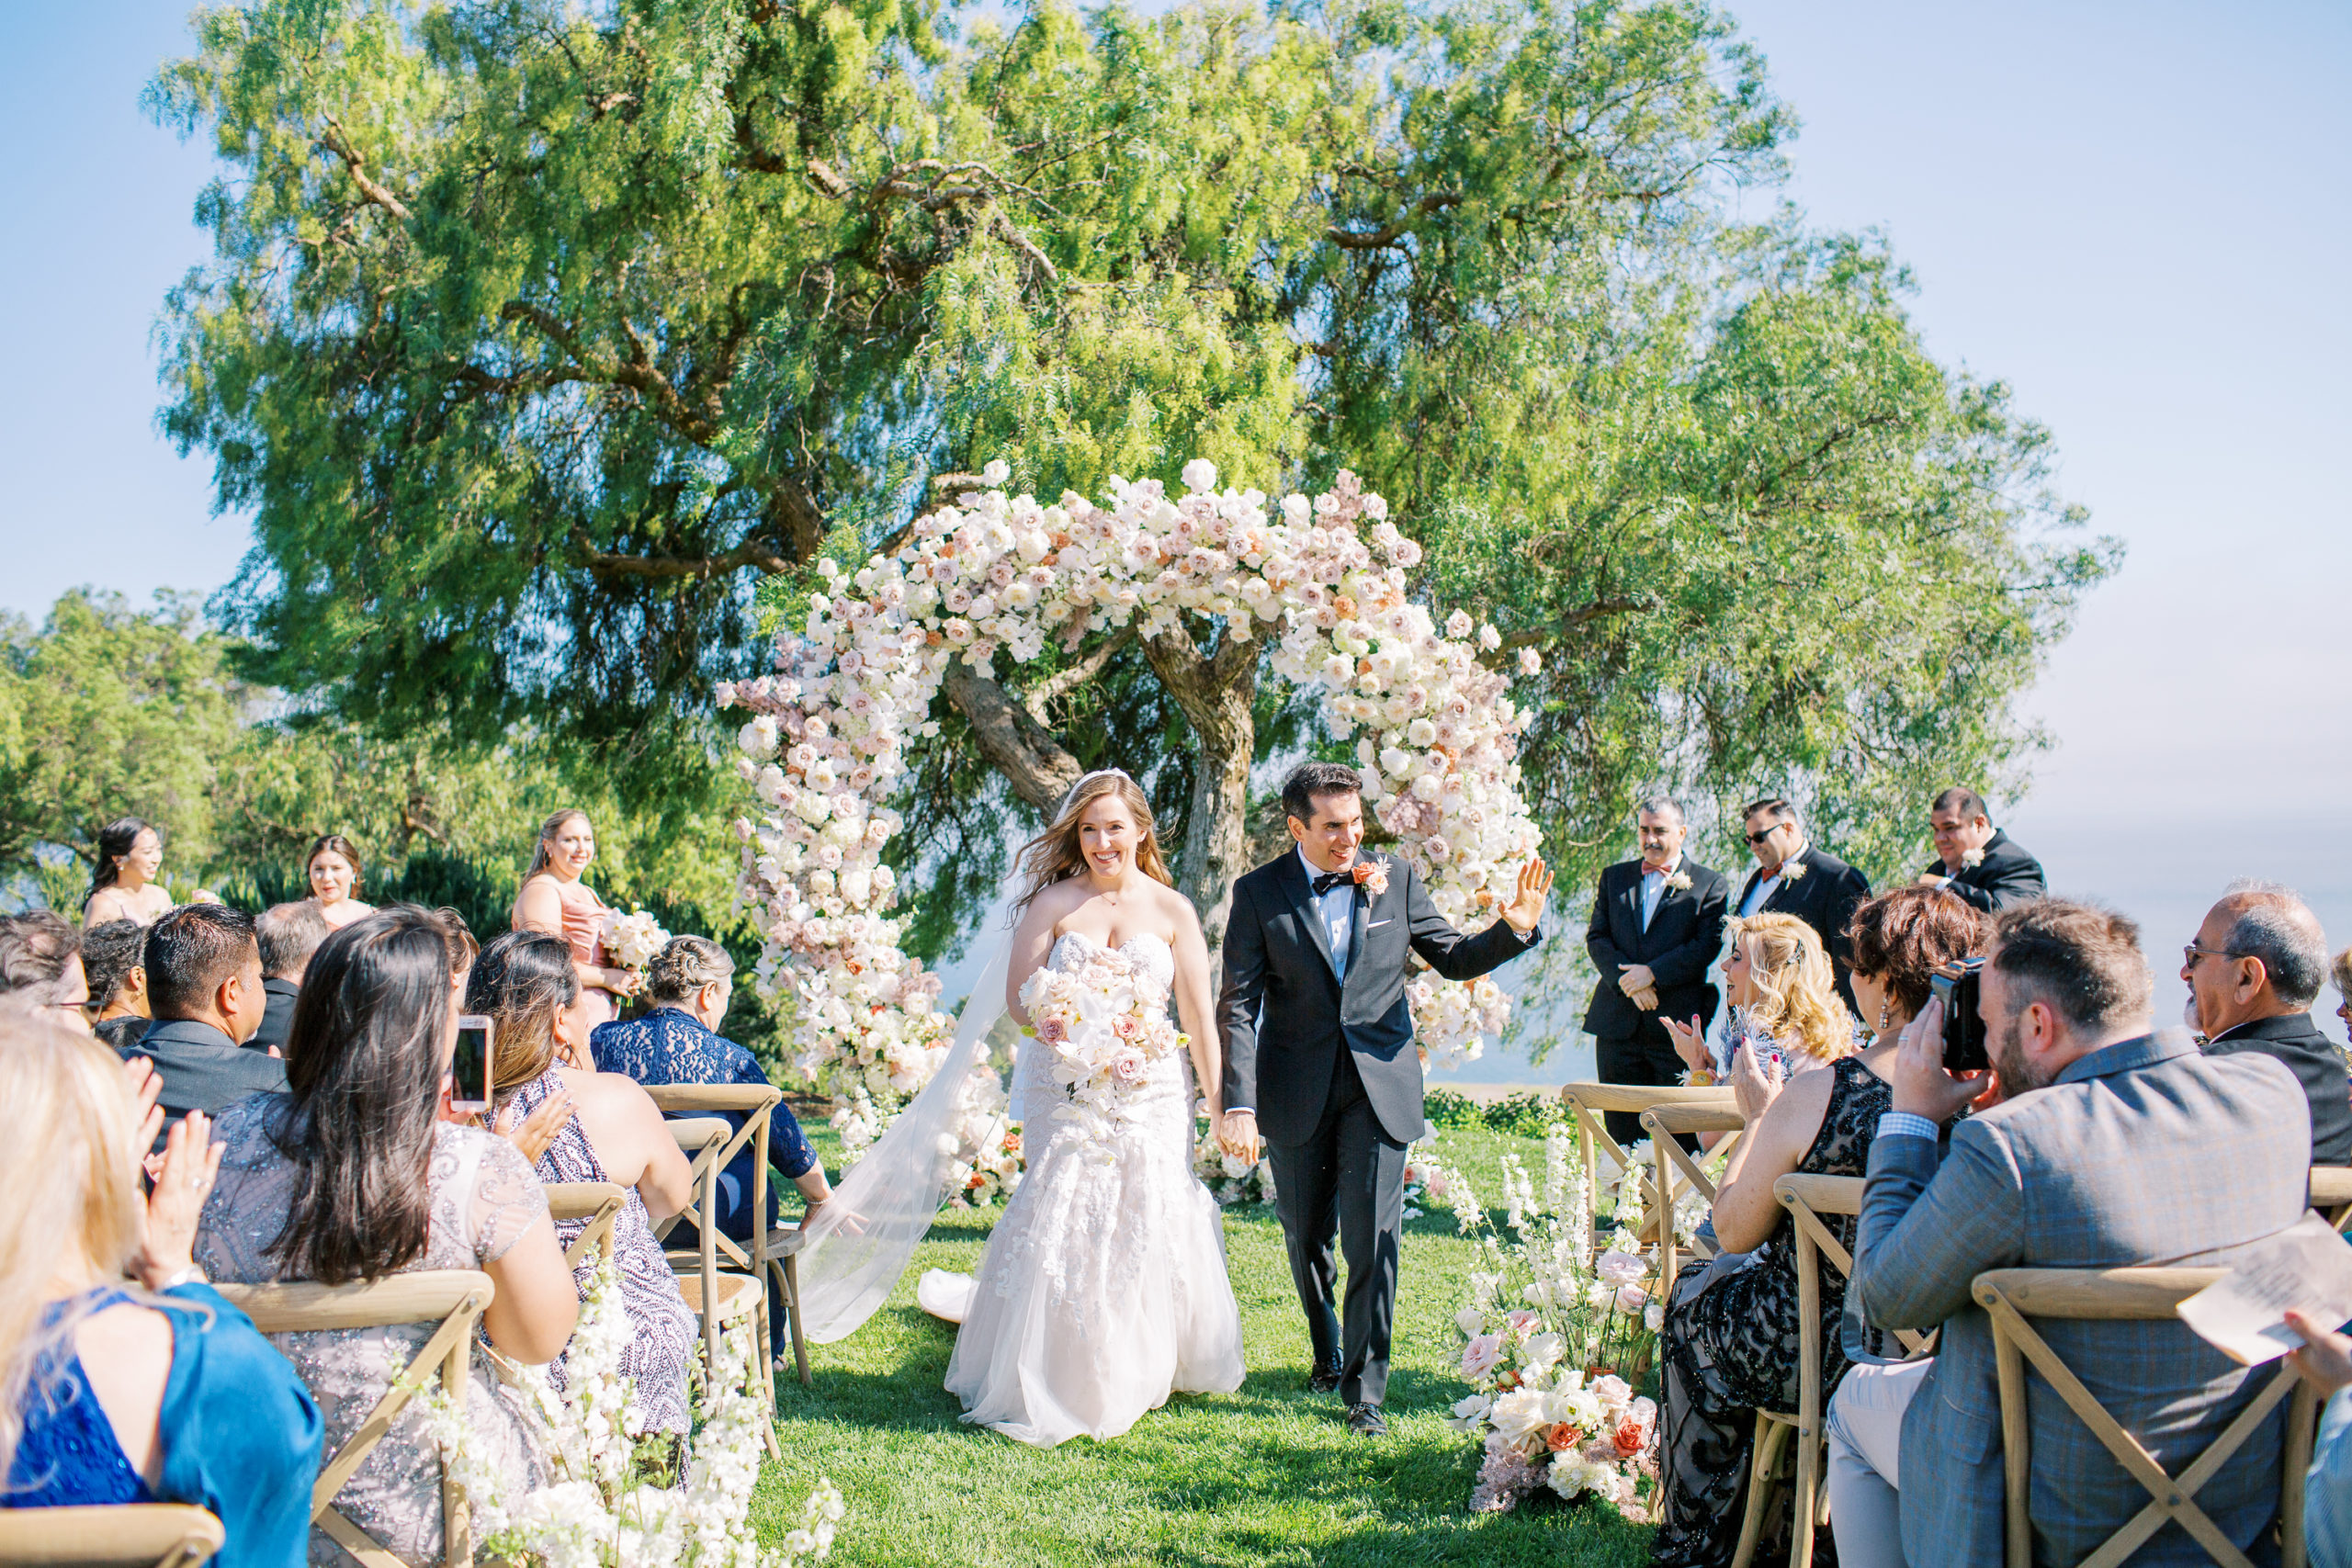 Catalina View Gardens Wedding - Walk Down the Aisle